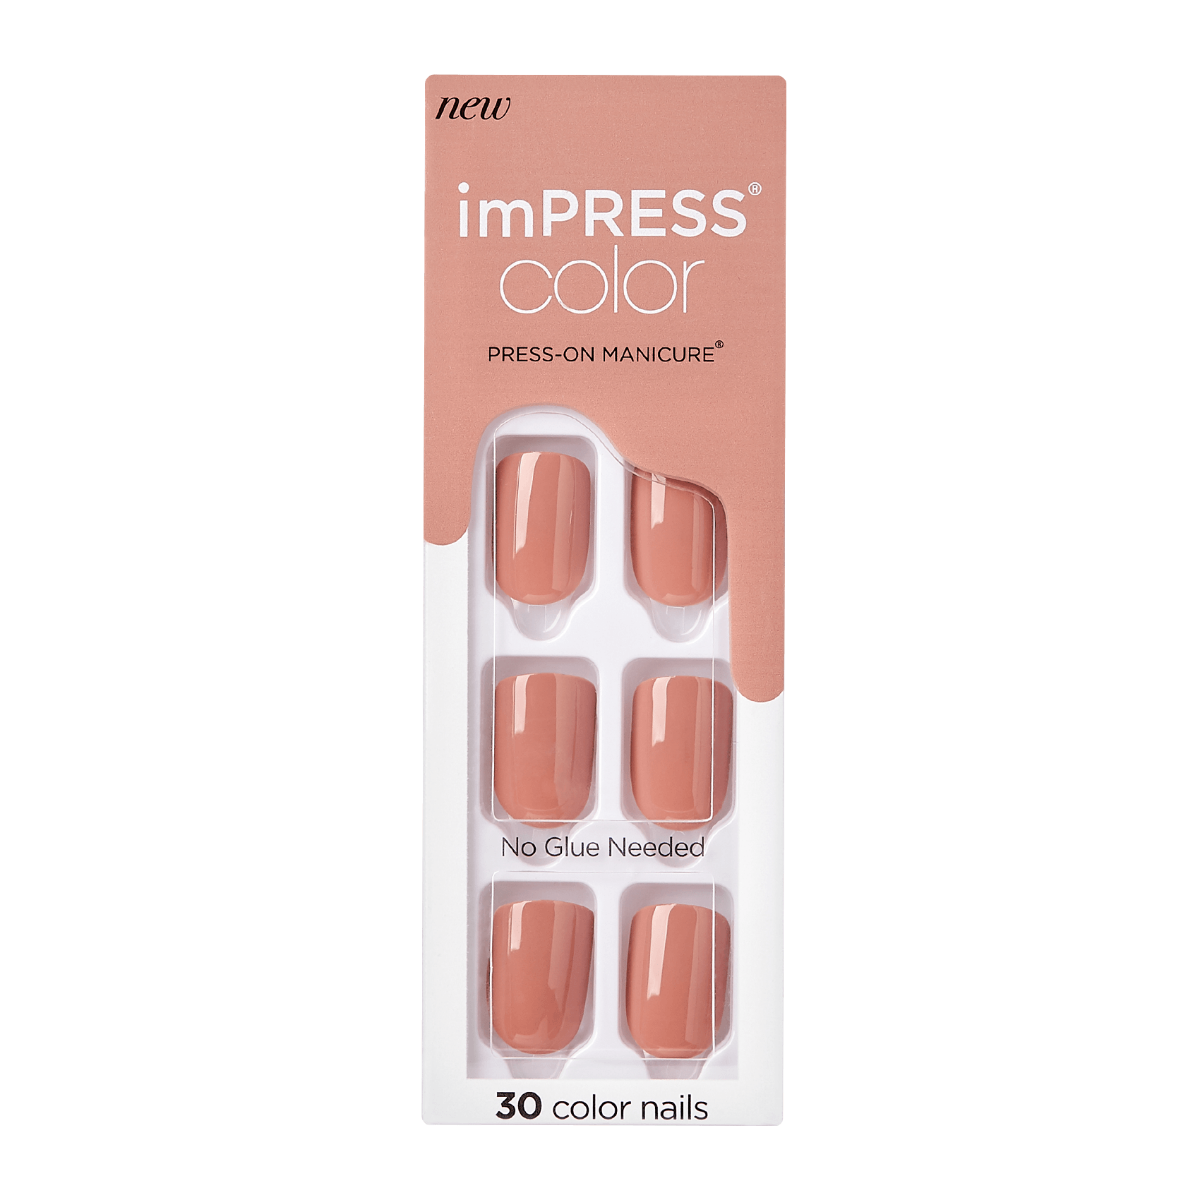 KISS ImPRESS Color Press-On Manicure - Caramel - Taille S